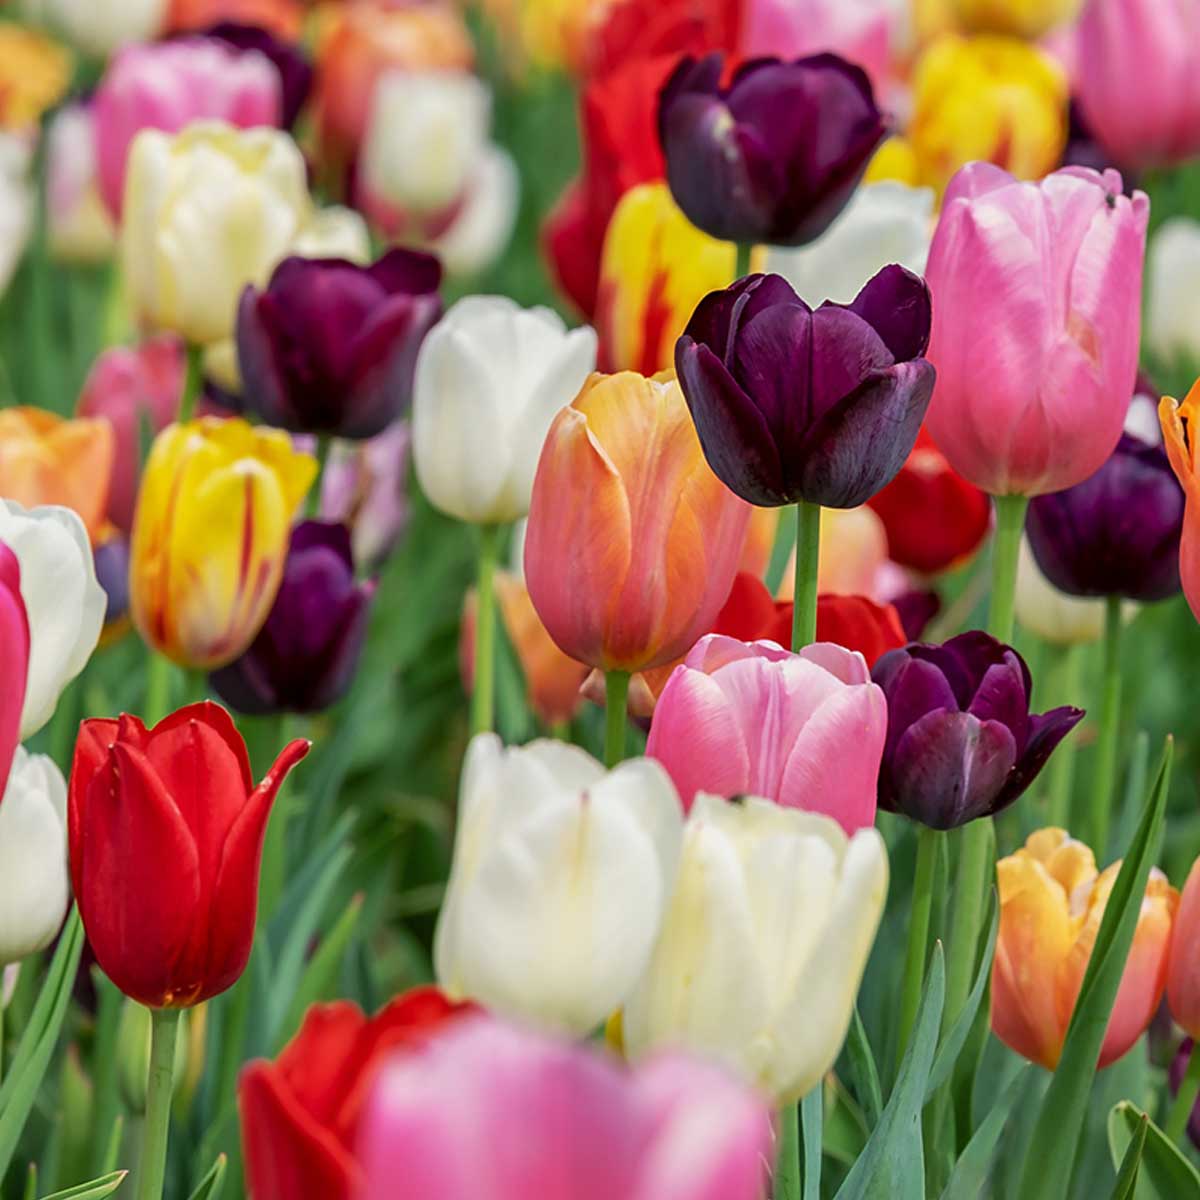 A multi-colored field of tulips.